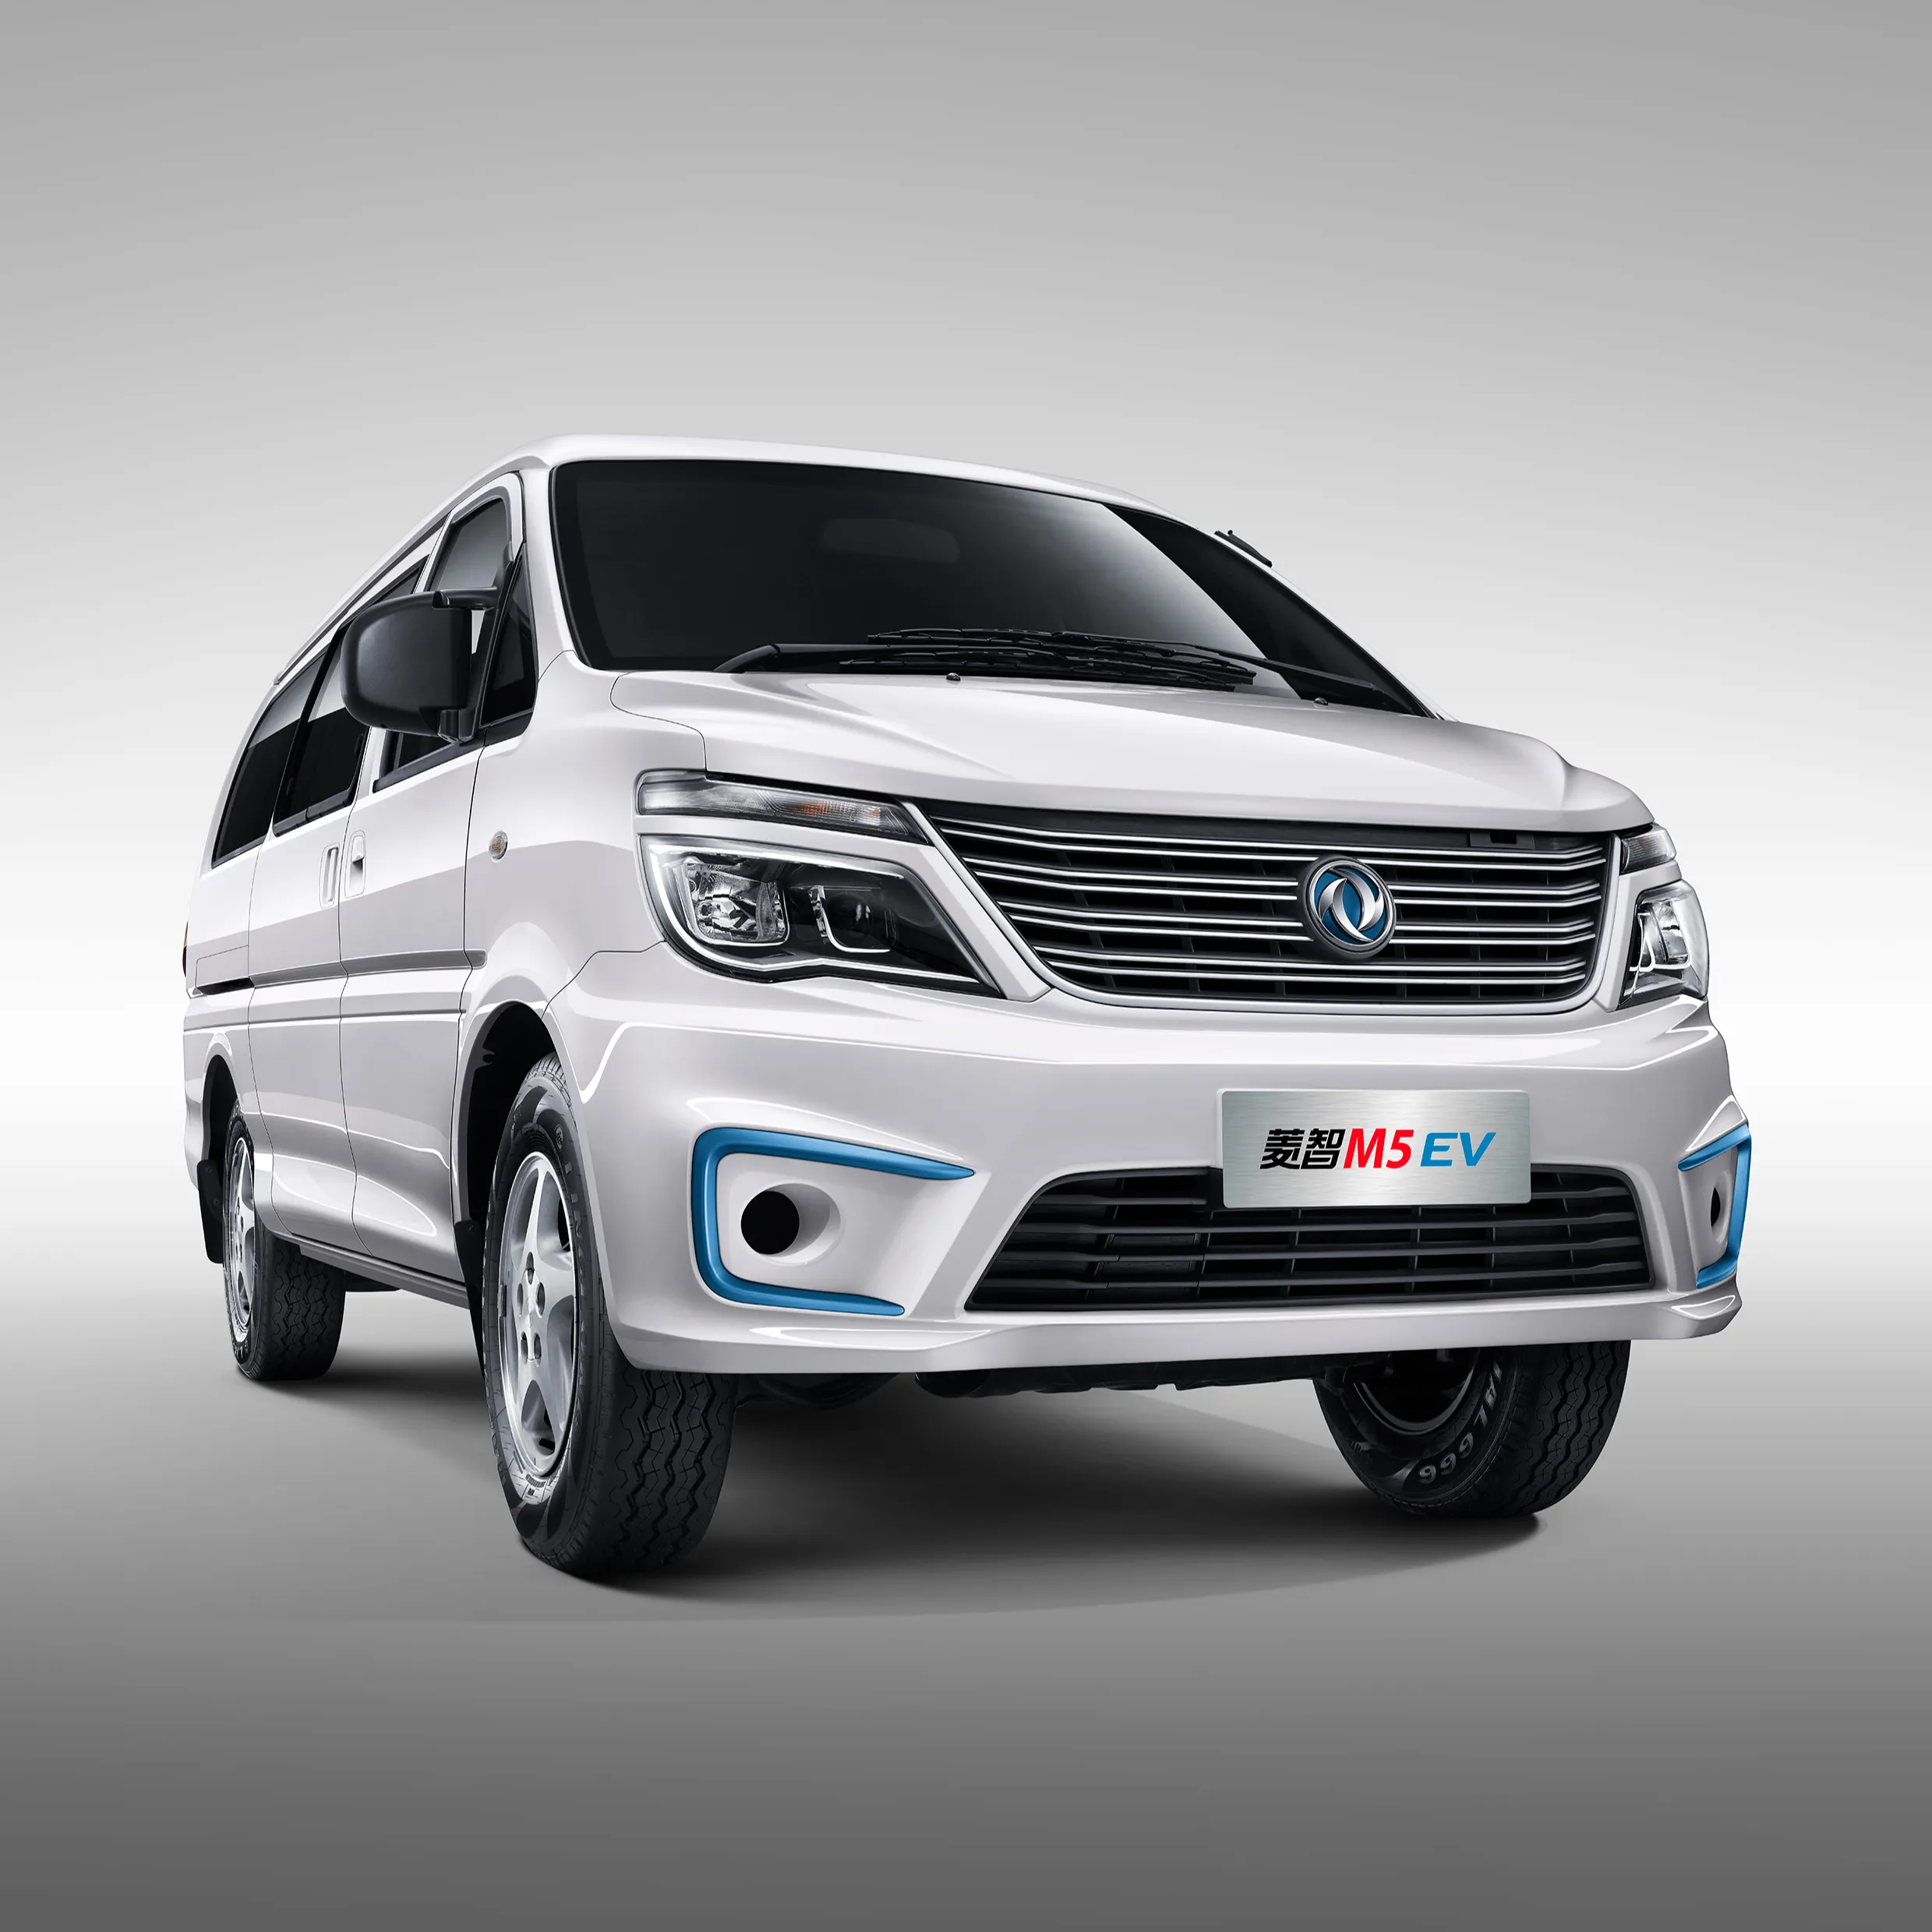 Luxury mpv car electric van Dongfeng M5 mpv ev with 5/9 seats cargo van